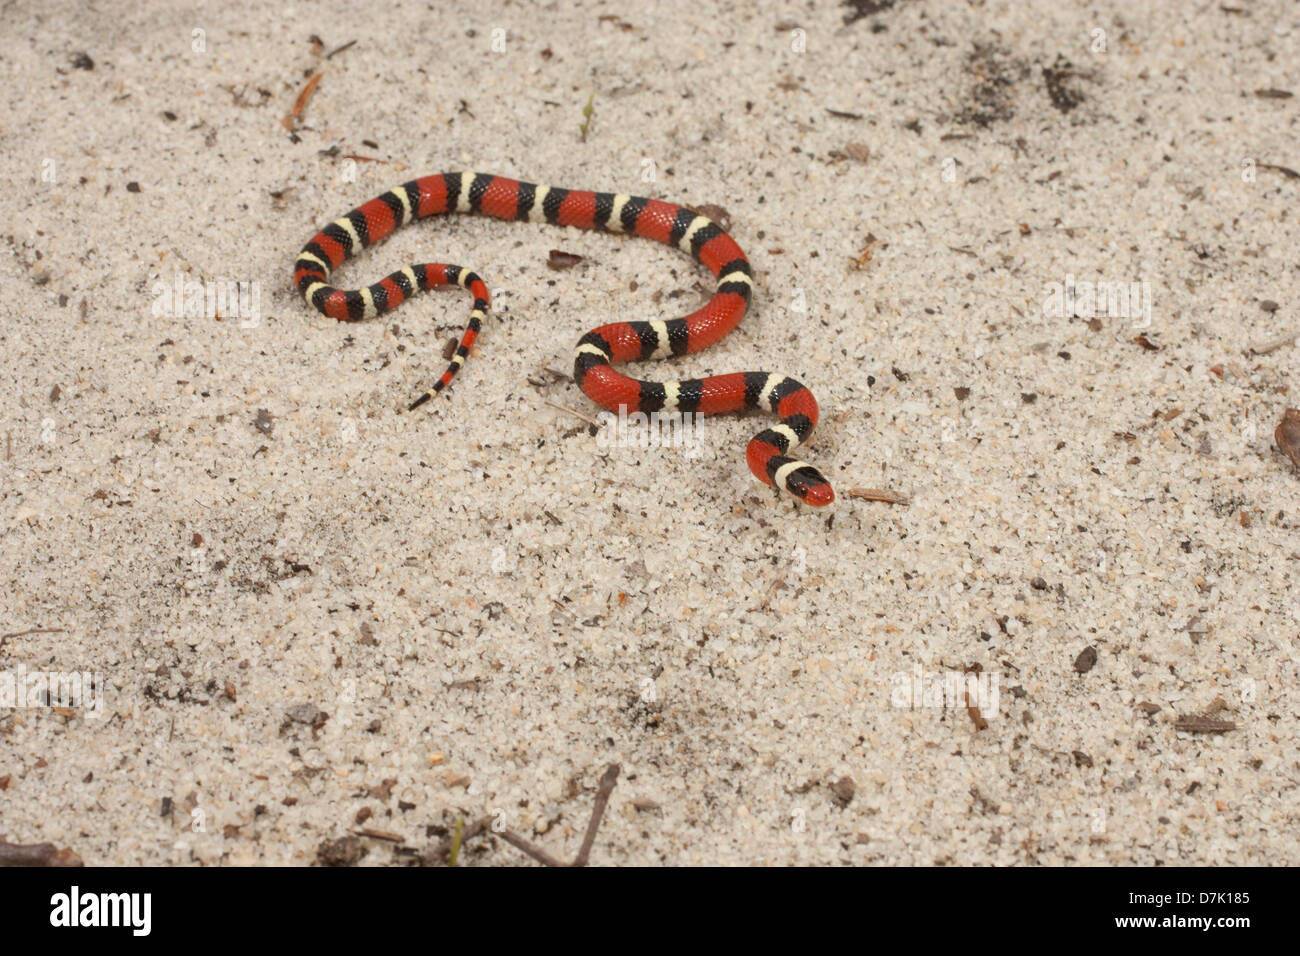 A scarlet king snake slithers across sand - Lampropeltis elapsoides Stock Photo